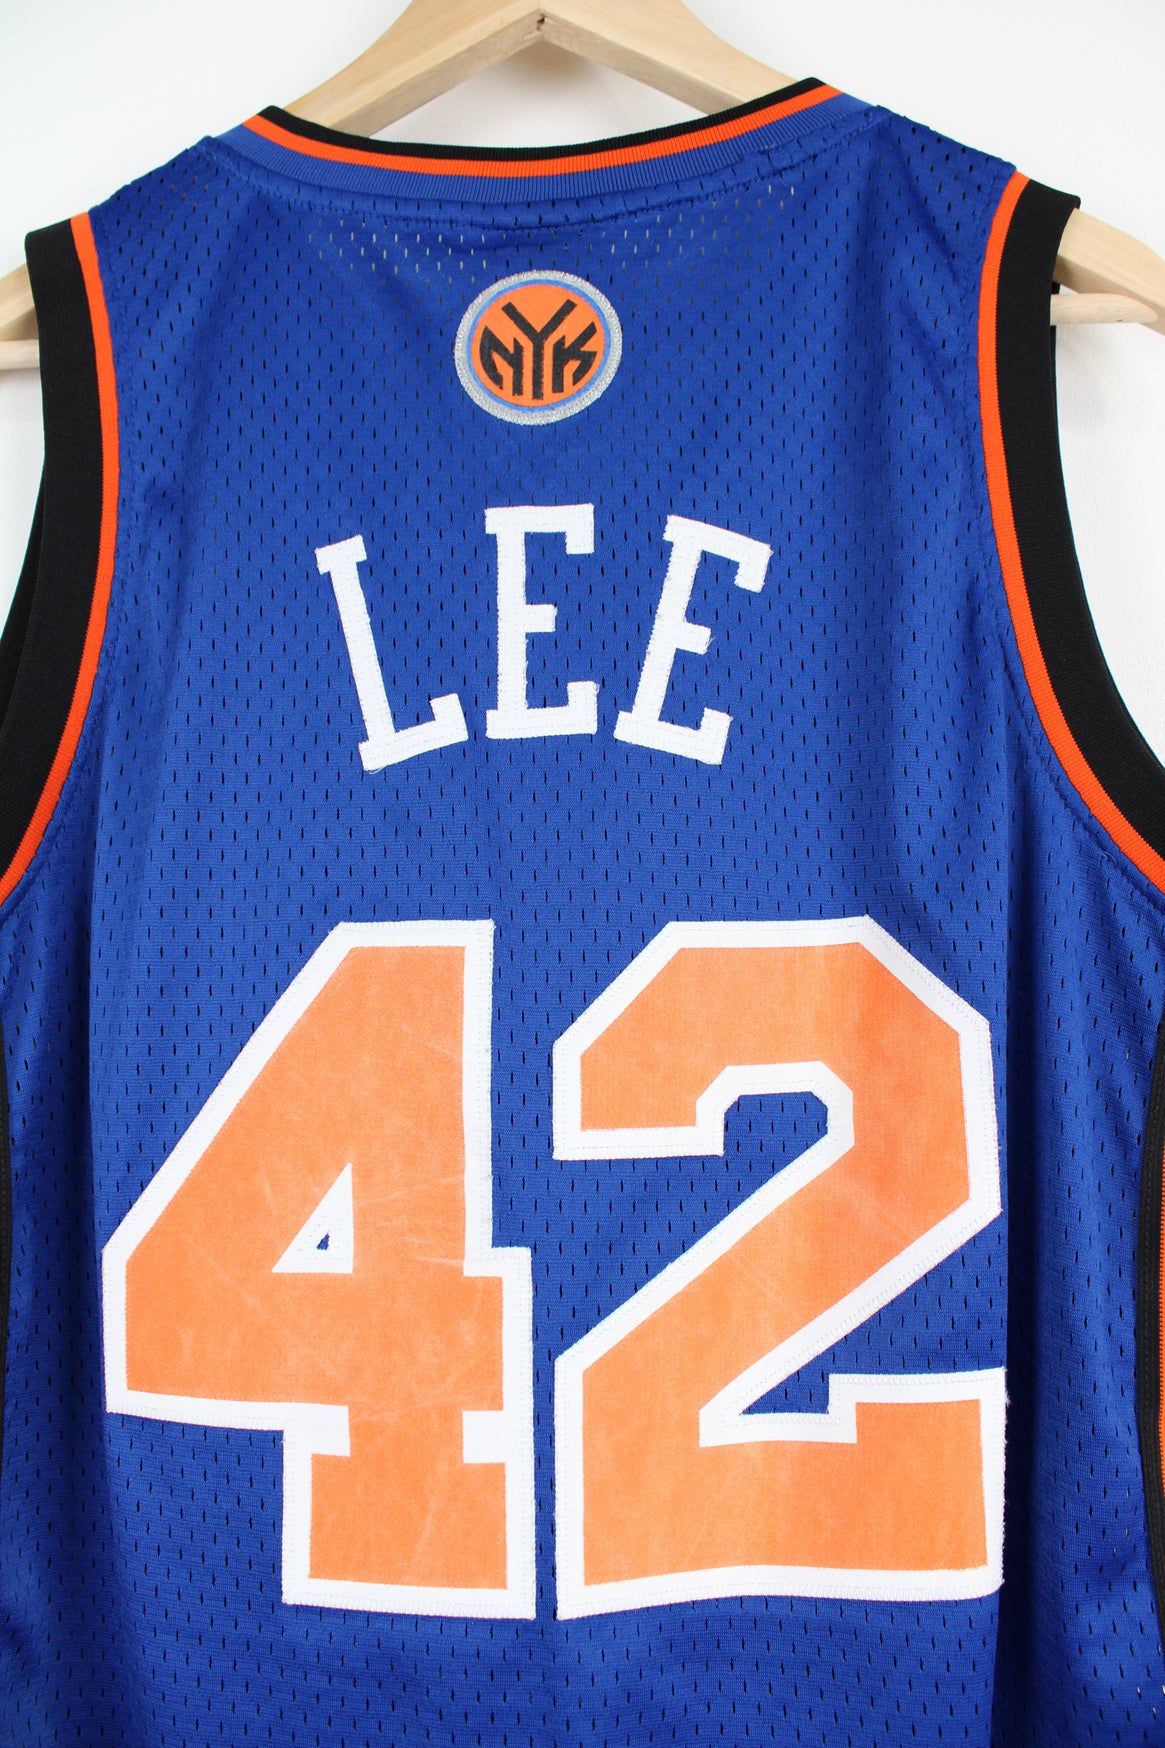 Authentic Vintage Adidas NBA New York Knicks David Lee Basketball Jersey